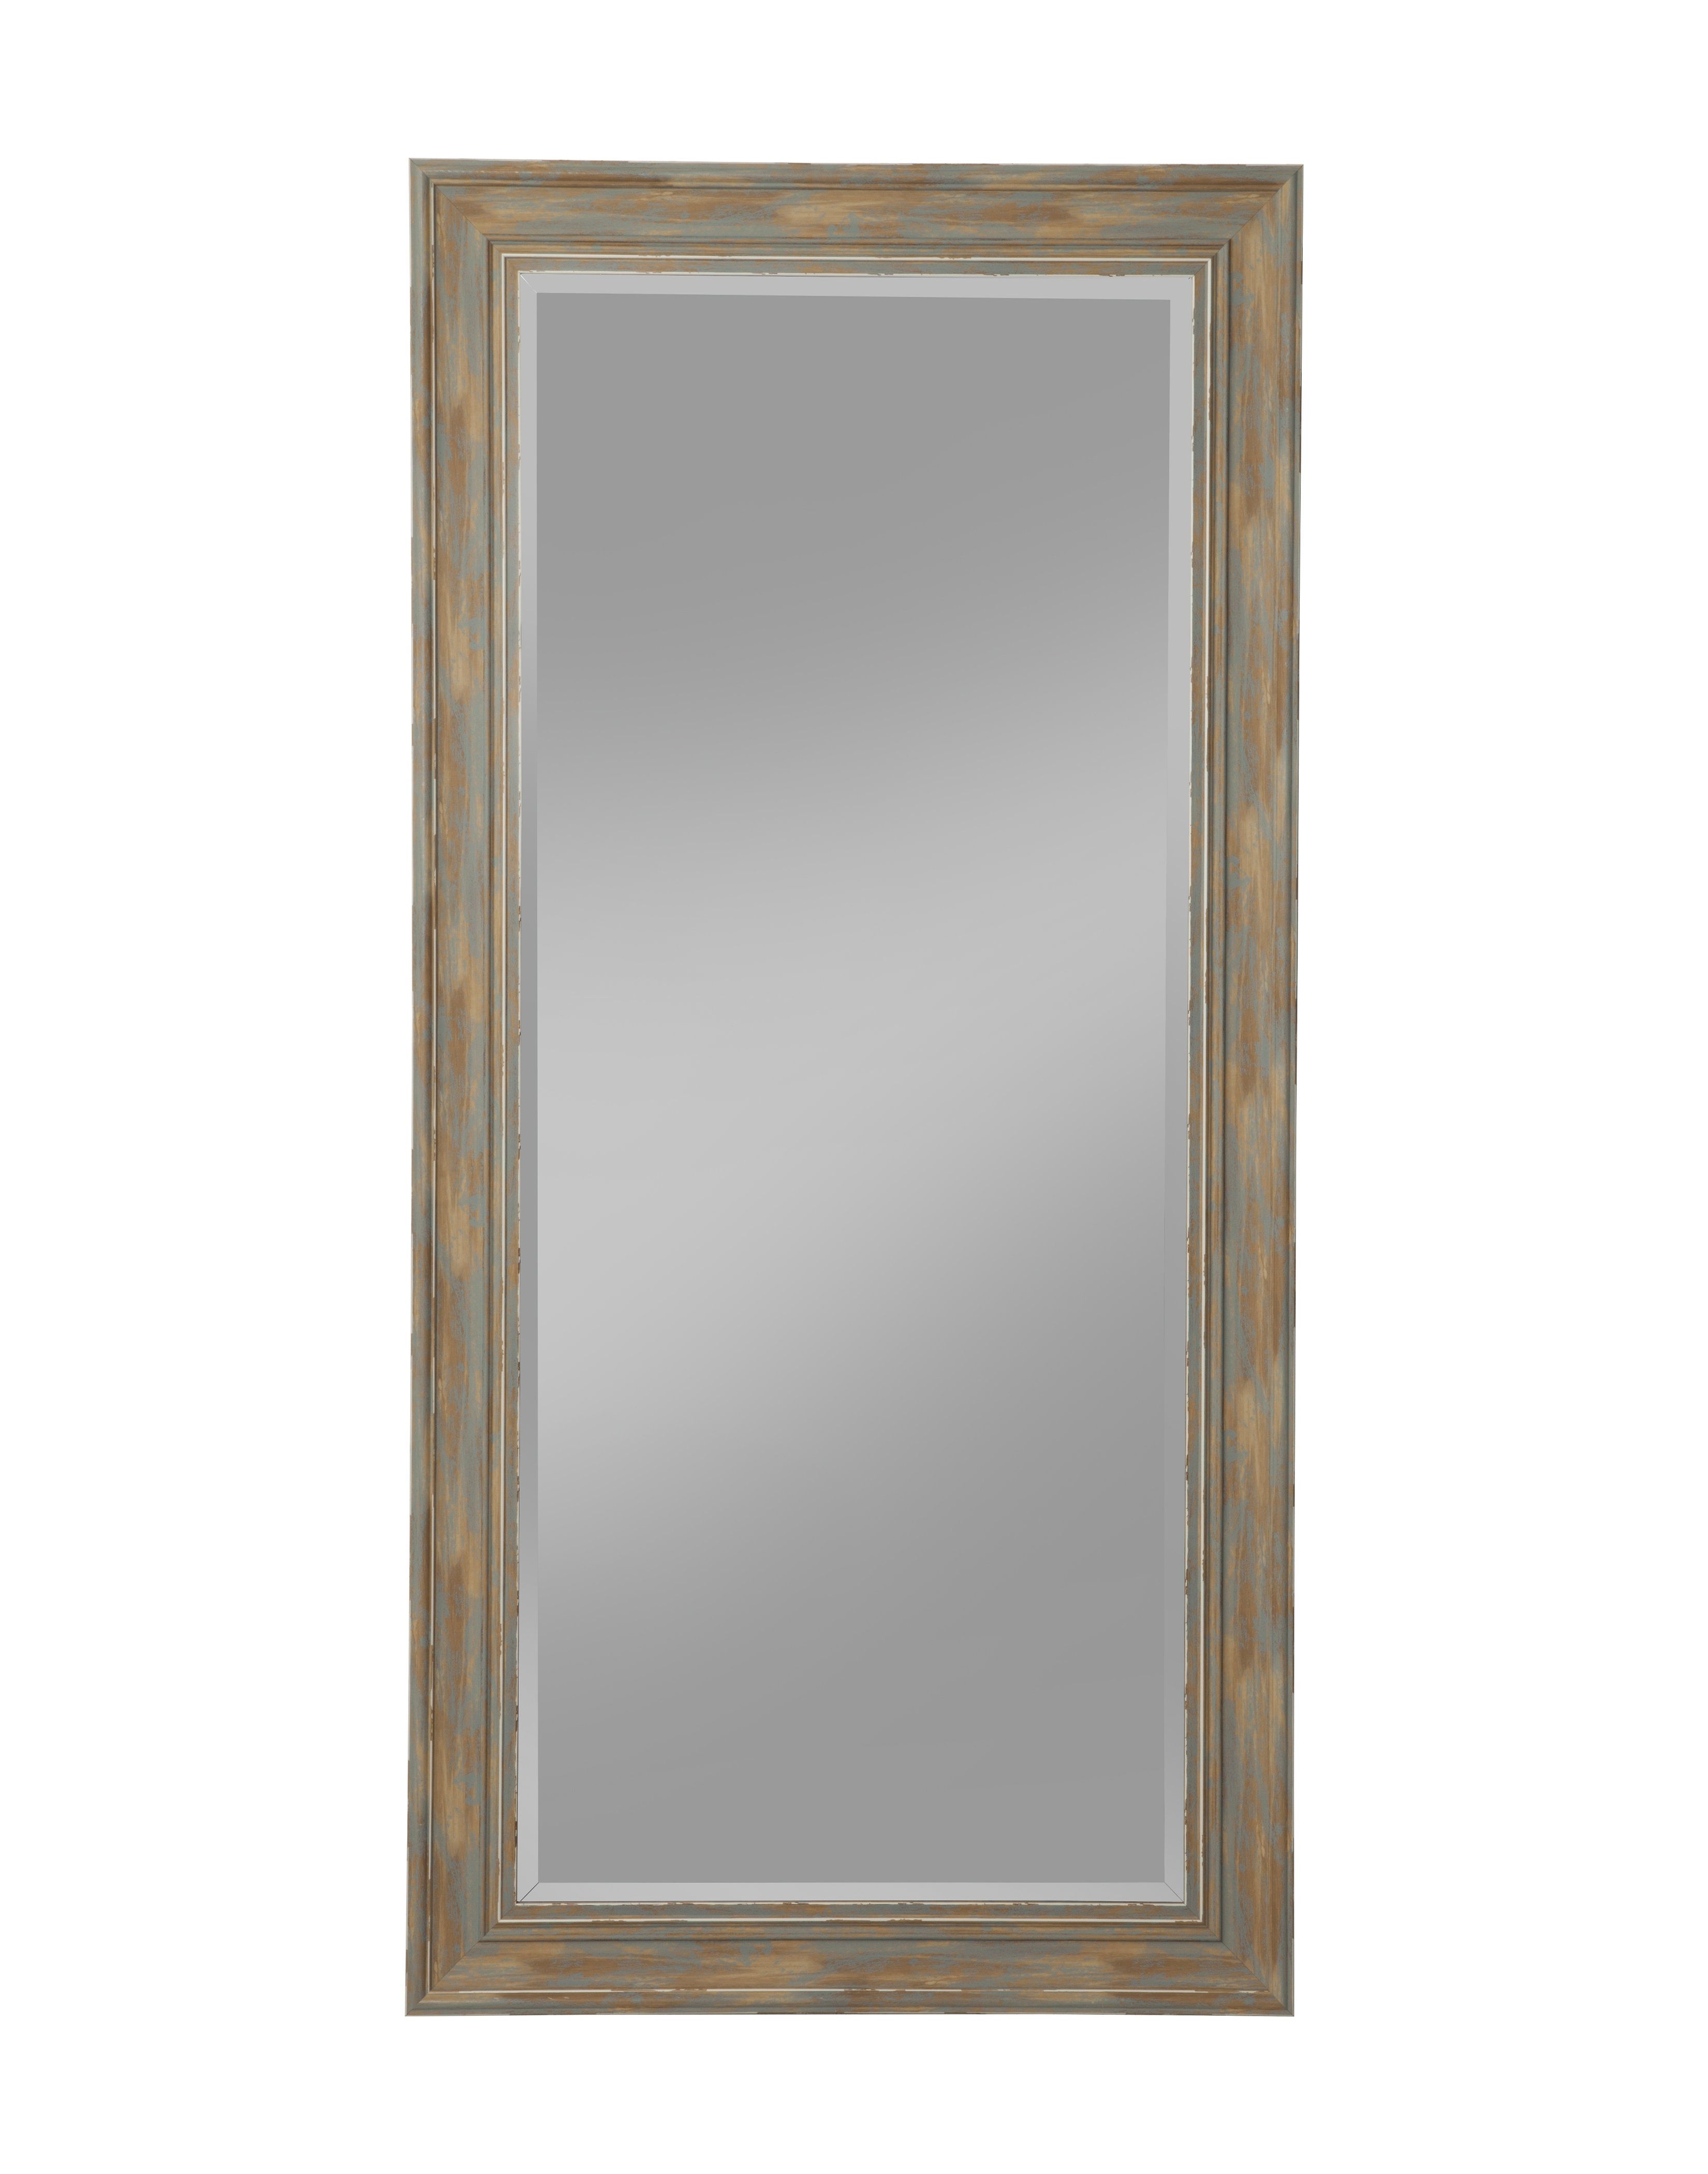 Somerton Bathroom/vanity Mirror & Reviews | Joss & Main Intended For Landover Rustic Distressed Bathroom/vanity Mirrors (View 24 of 30)